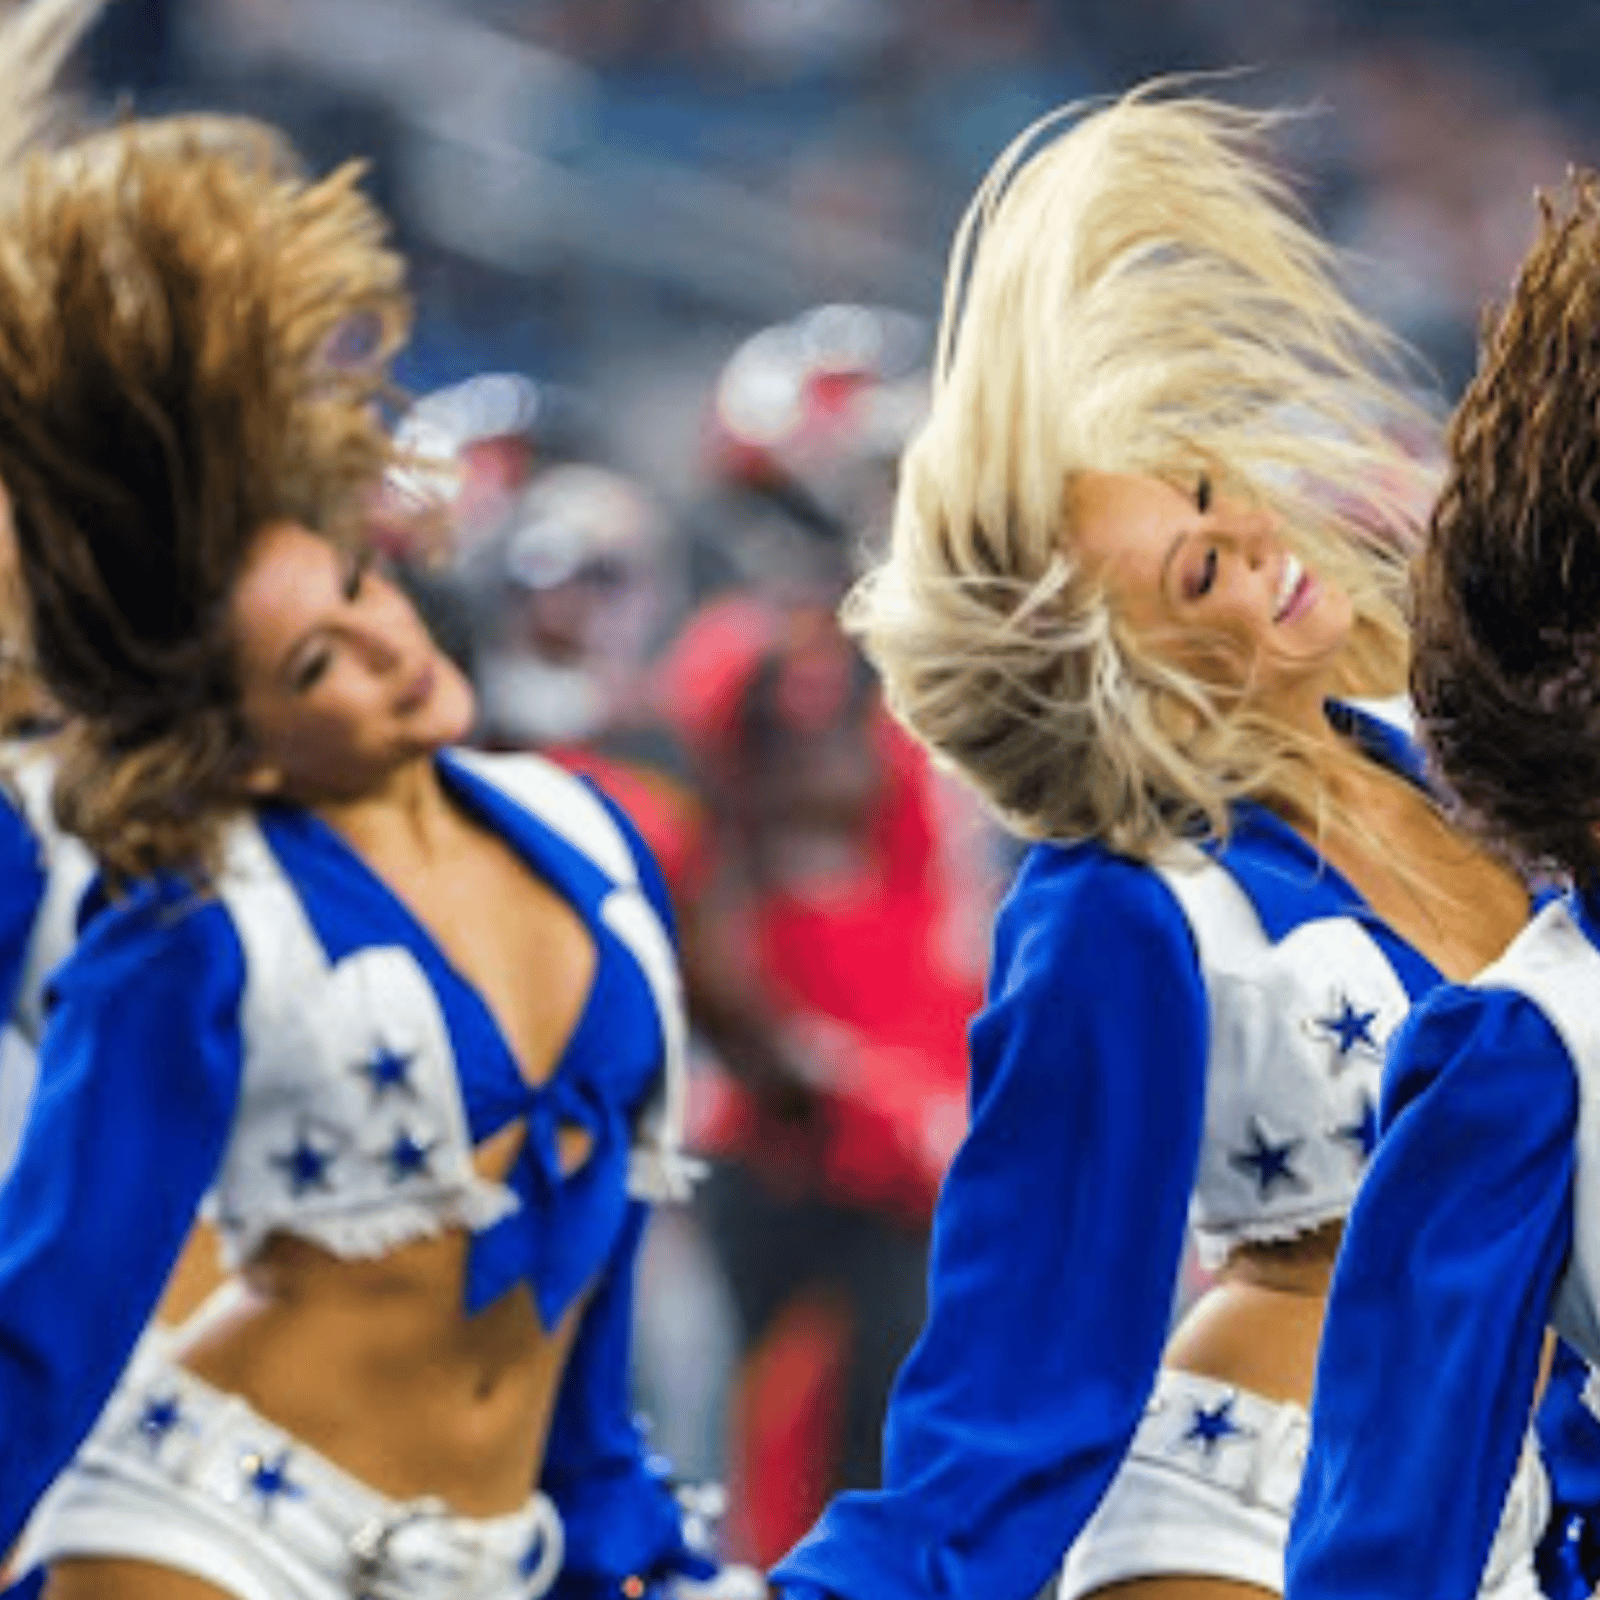 Dallas Cowboys cheerleaders returning to the screen! 